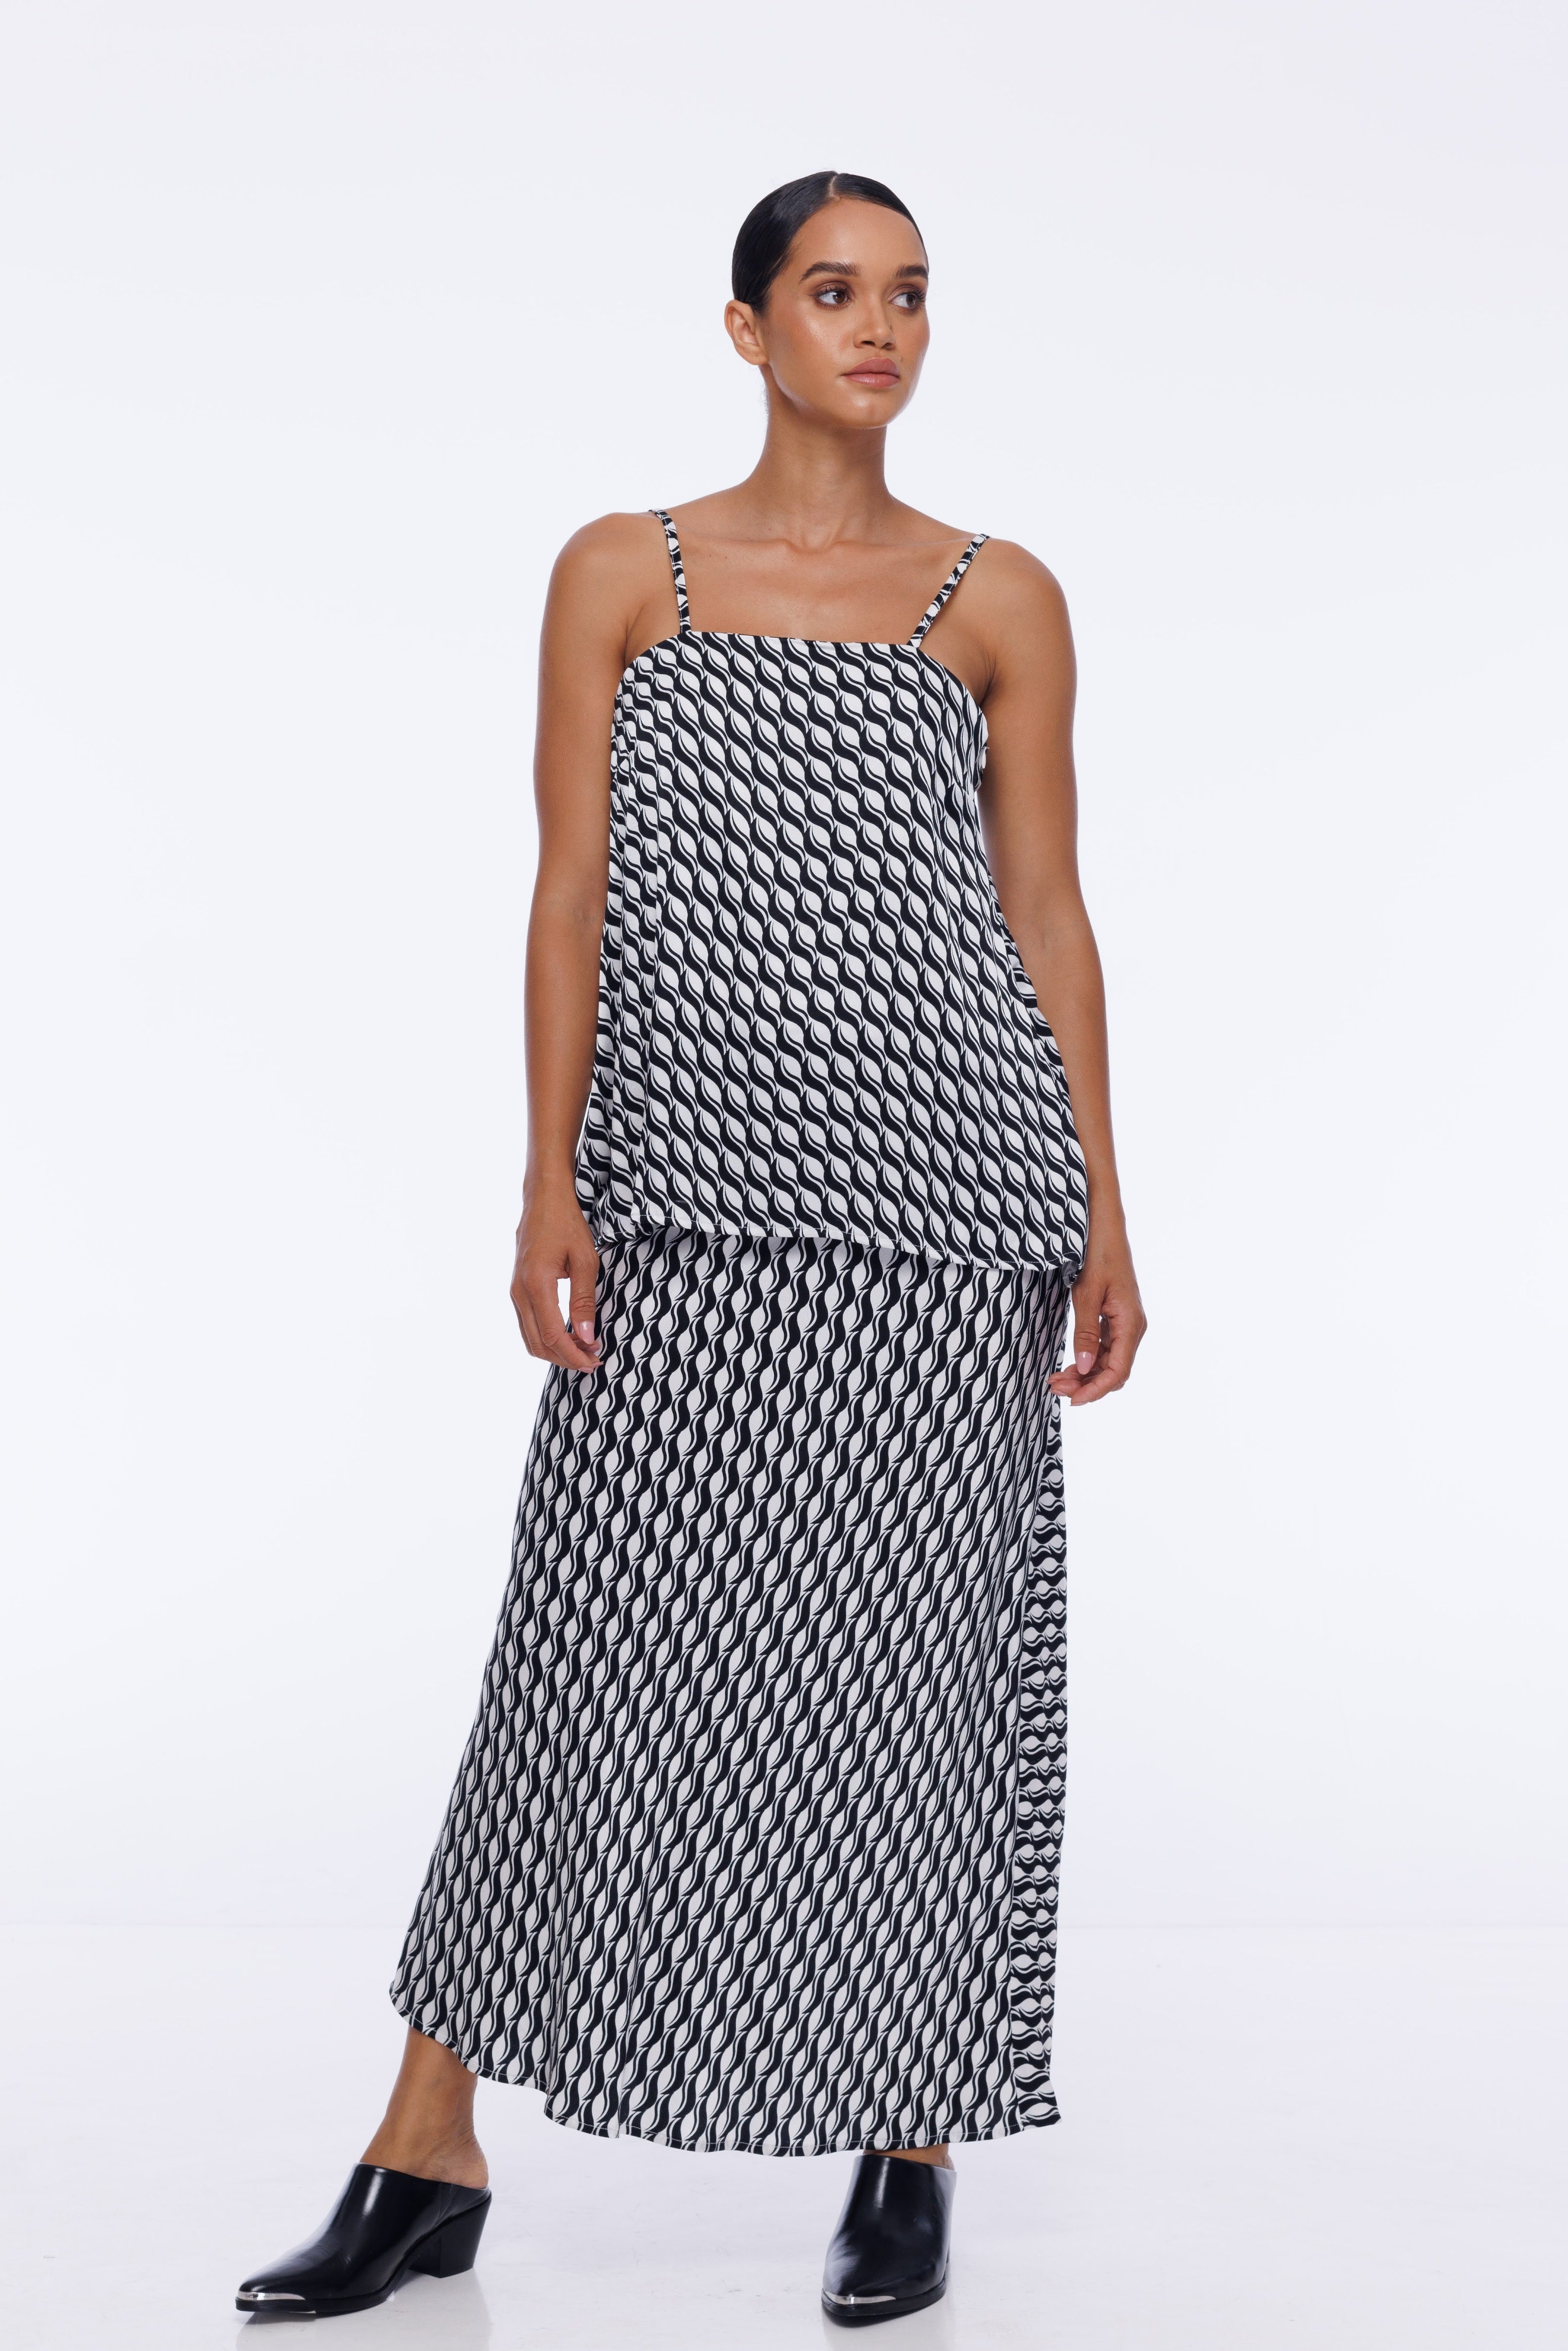 Saturday Skirt - Exclusive Black/White Small Geometric Print